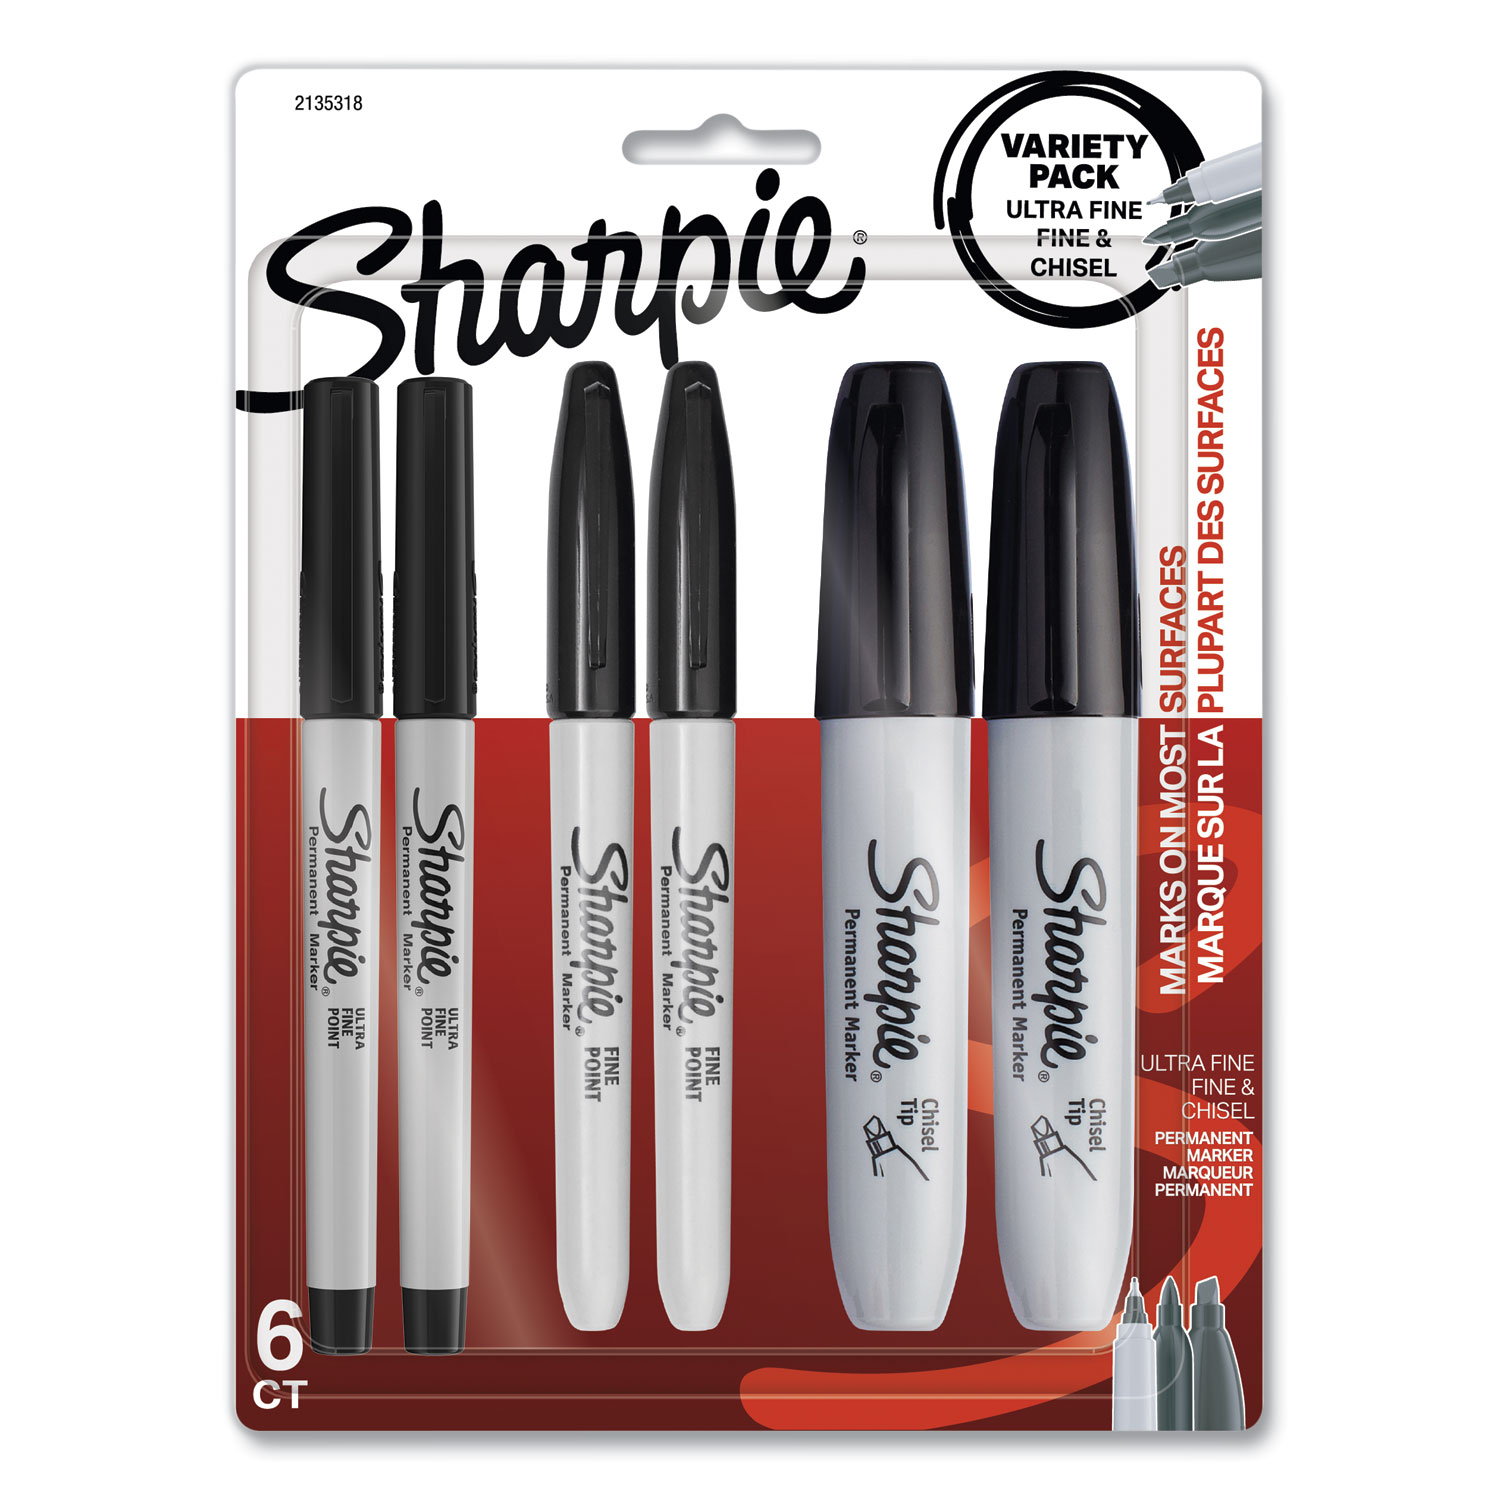 Sharpie Metallic Fine Point Permanent Markers - SAN2003899 